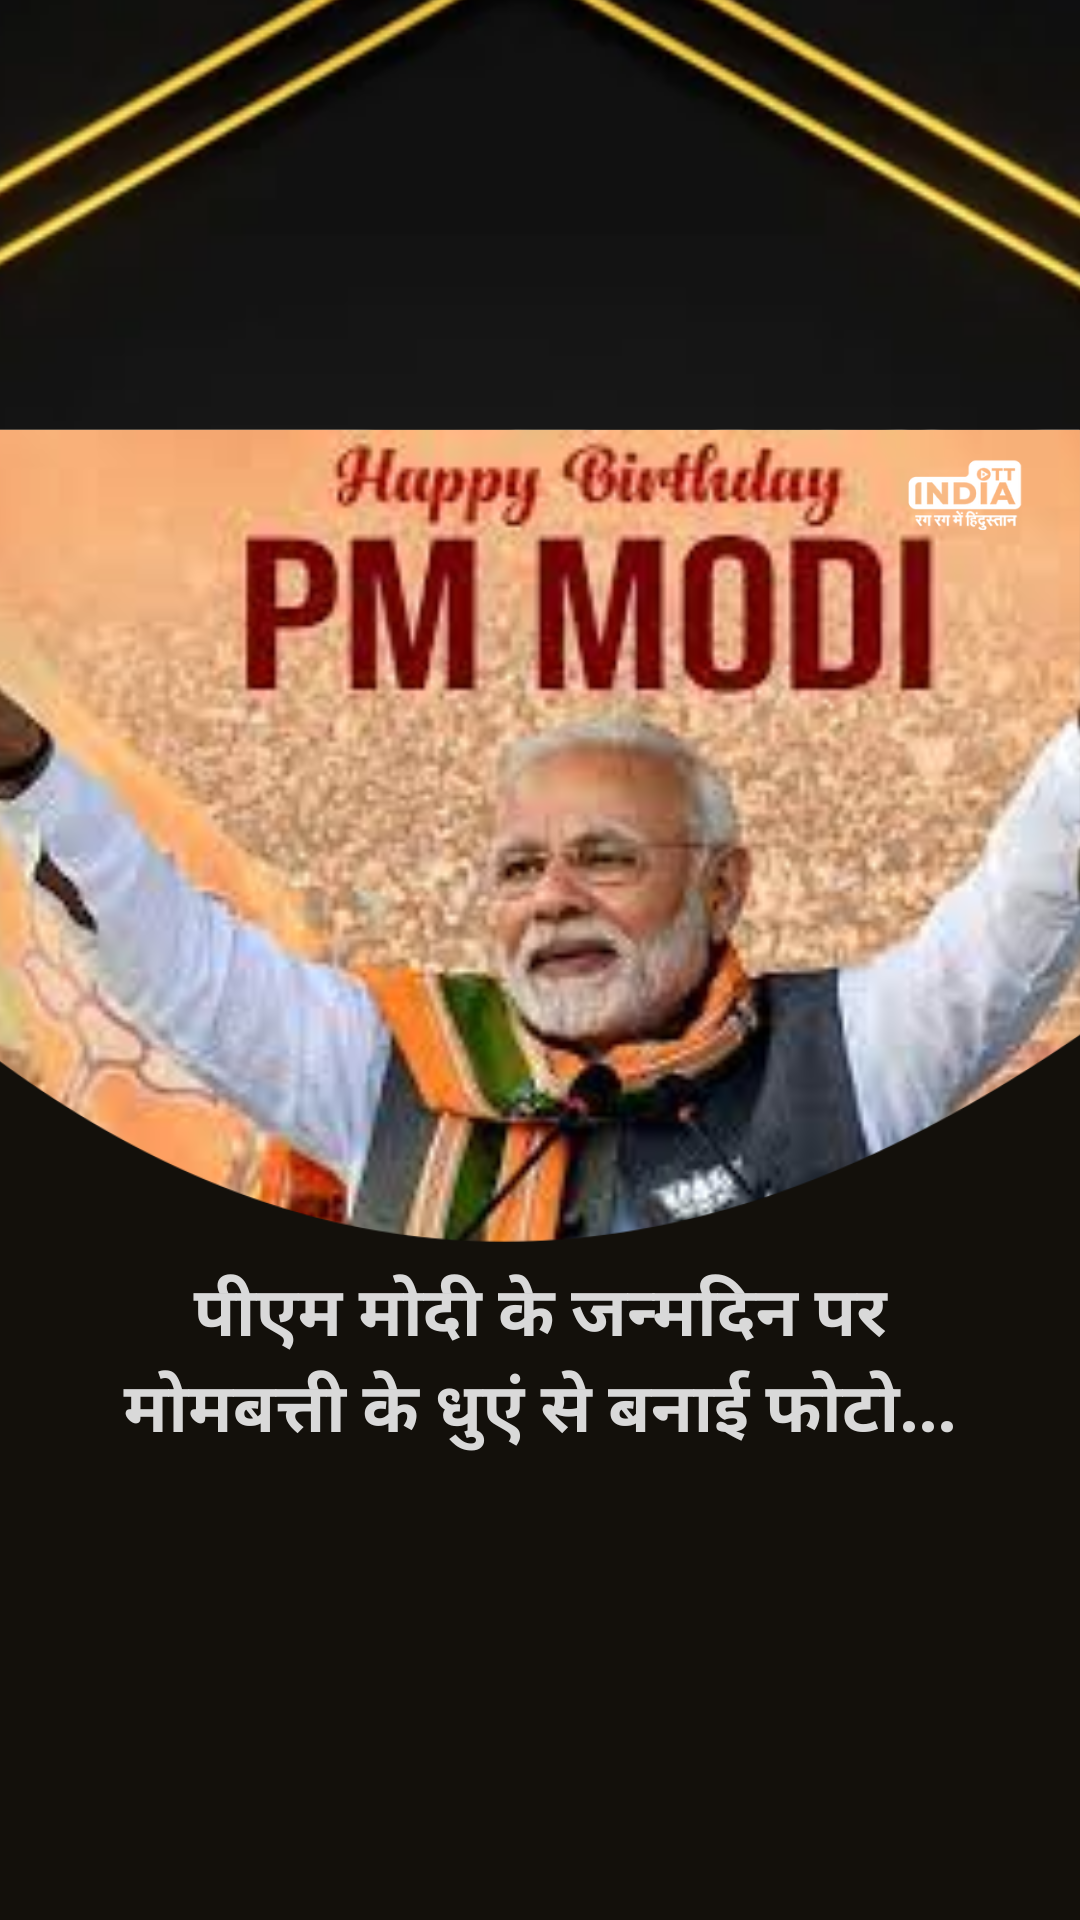 PM Modi Birthday: Today is PM Modi's 73rd birthday, Cuttack artist made the portrait using candle smoke.